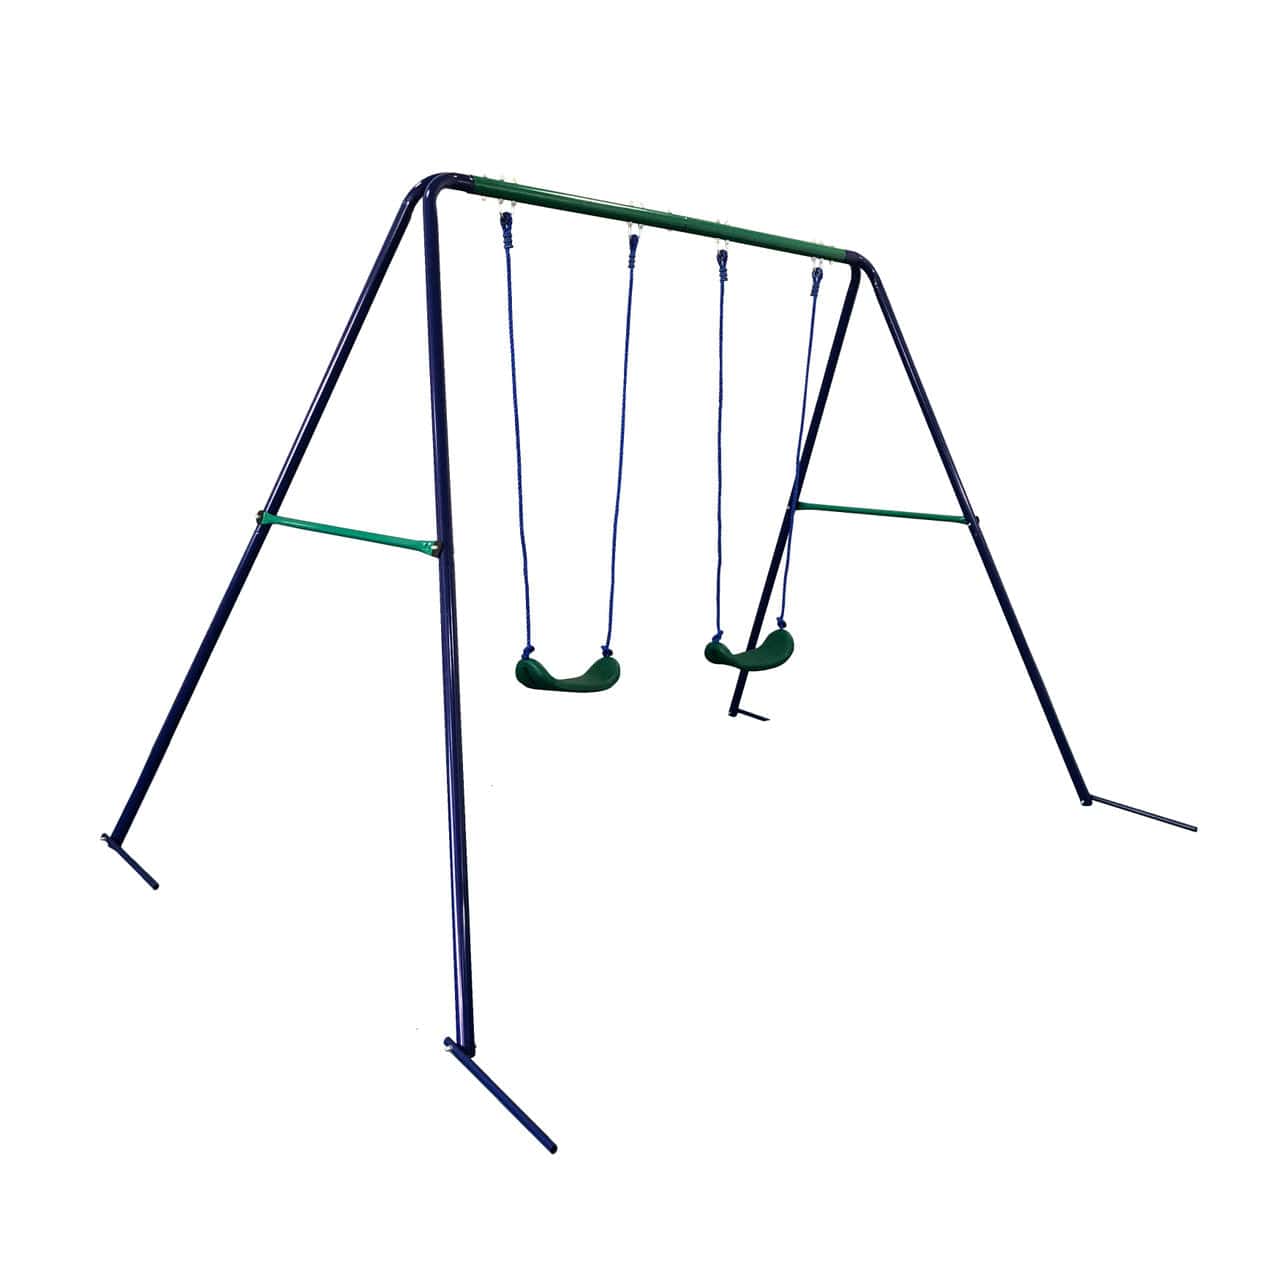 Aleko Outdoor Sturdy Child Swing Seat with 2 Swings